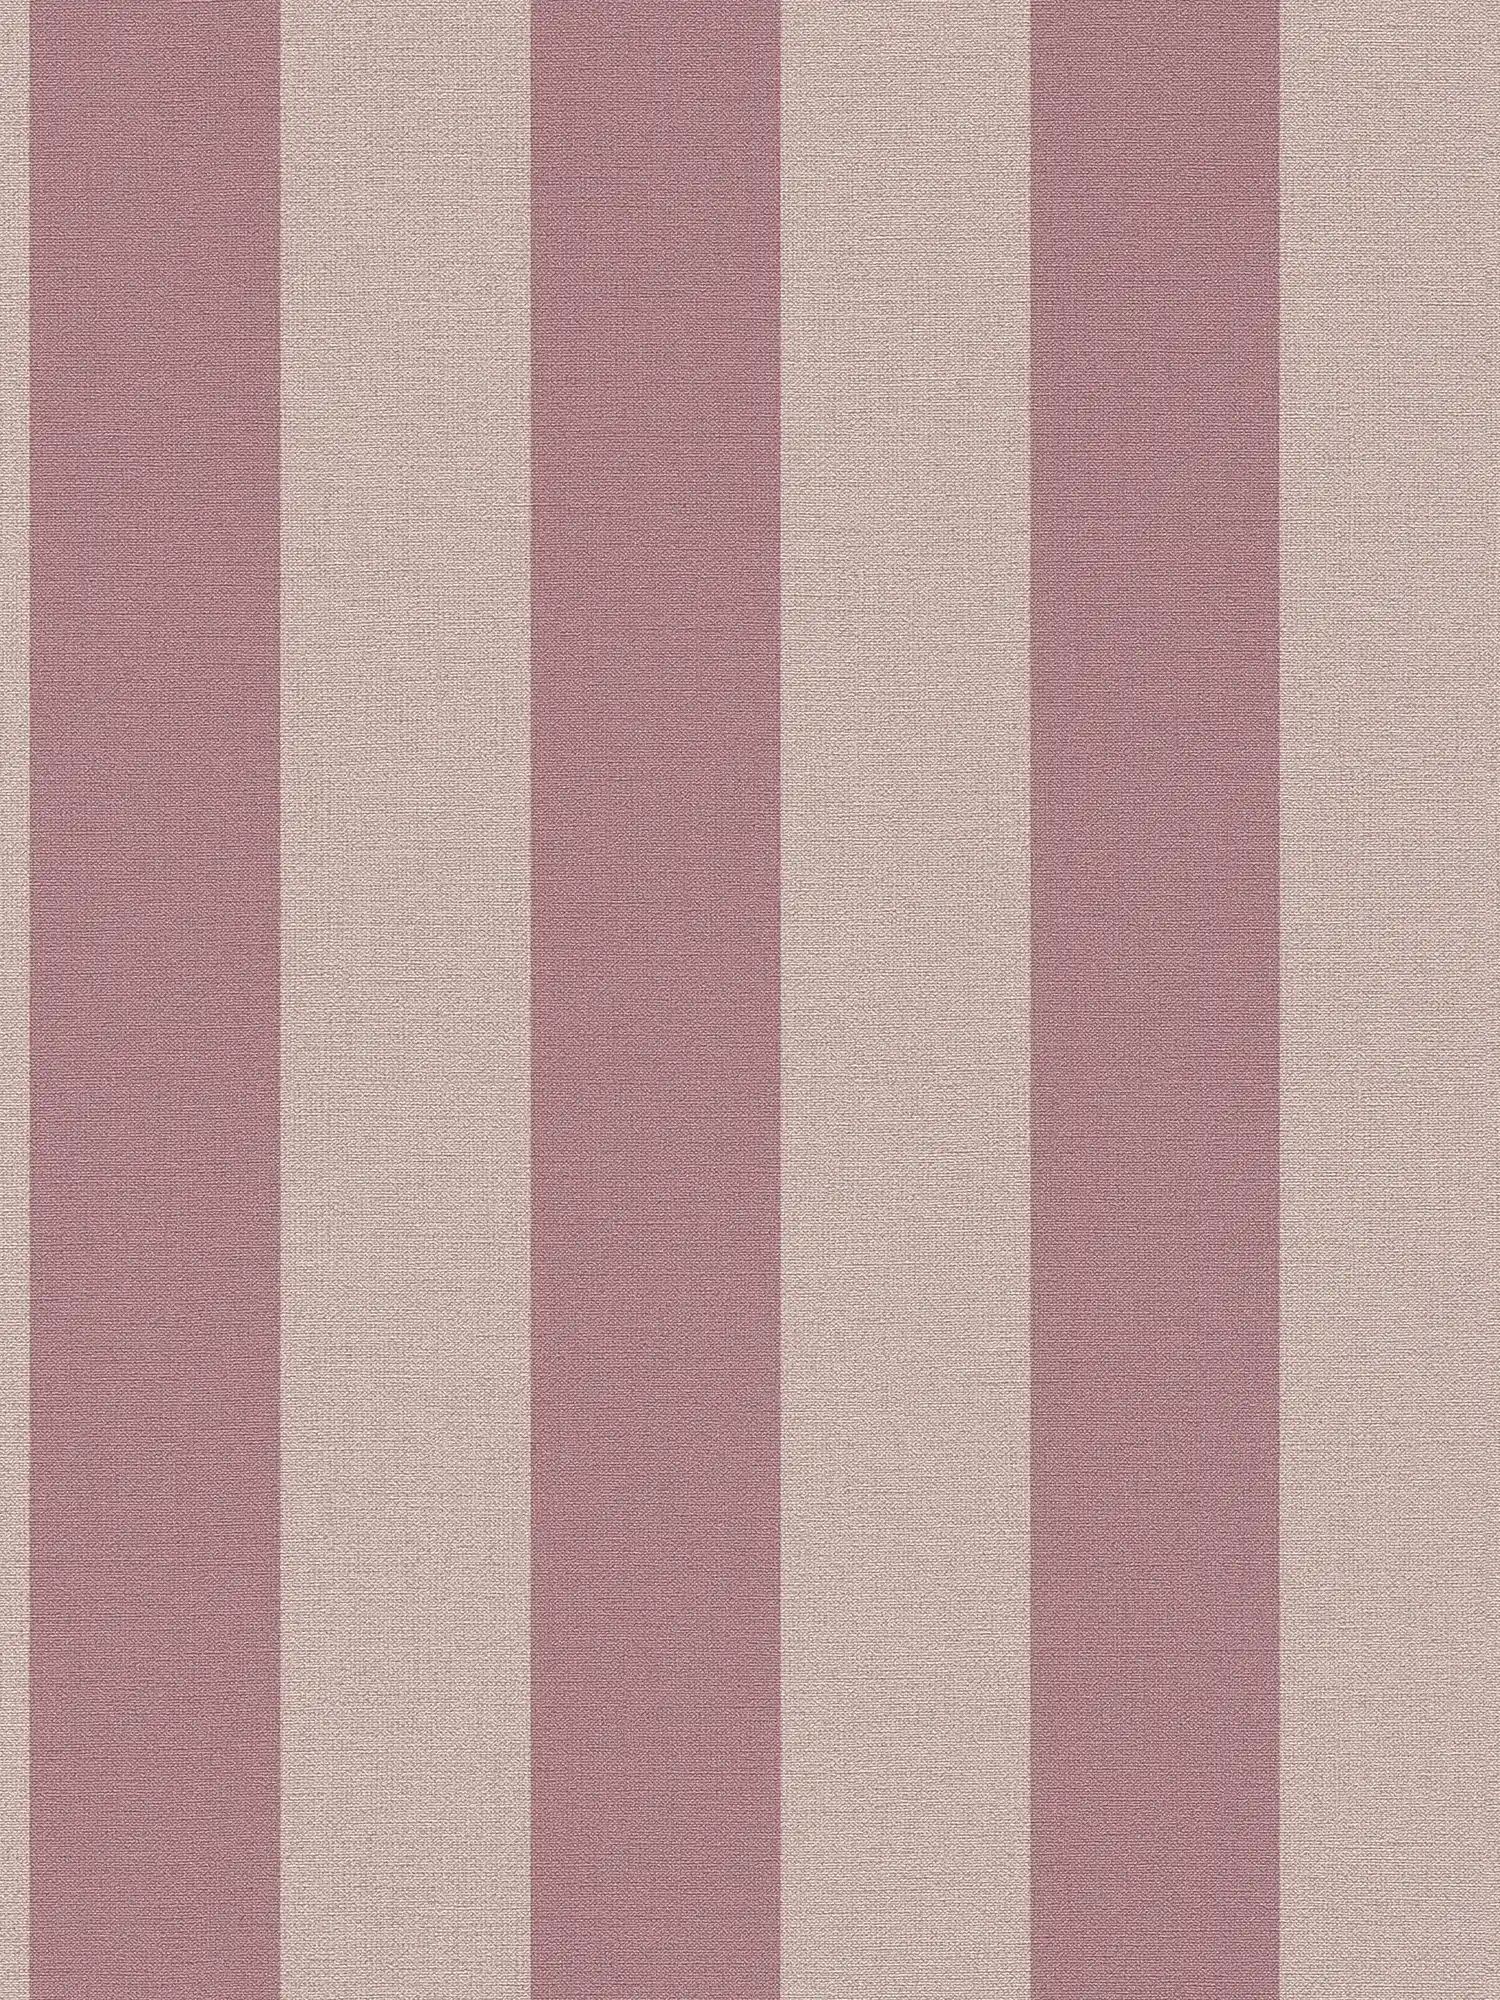 PVC-free striped wallpaper with linen look - purple, grey
